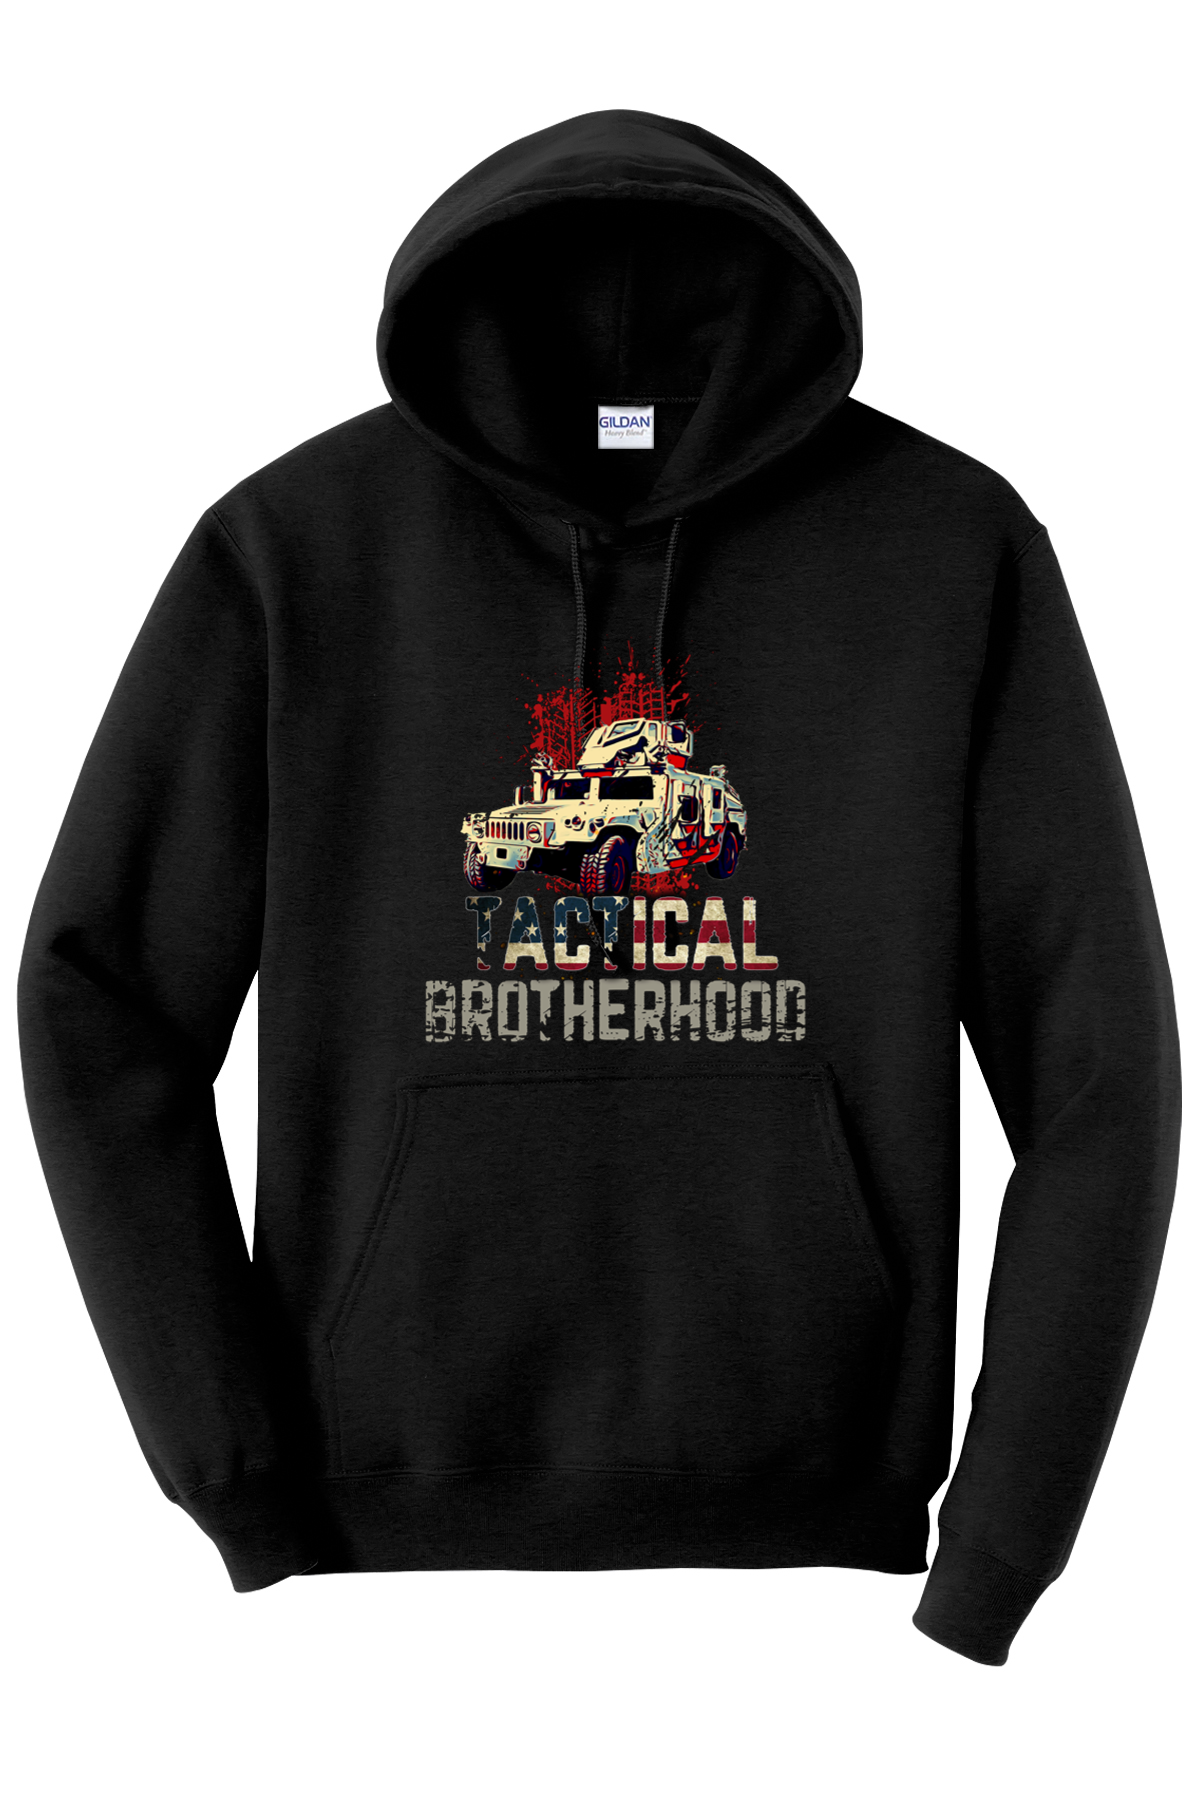 OG2 - HUMMWV - Tactical Brotherhood Hoodie